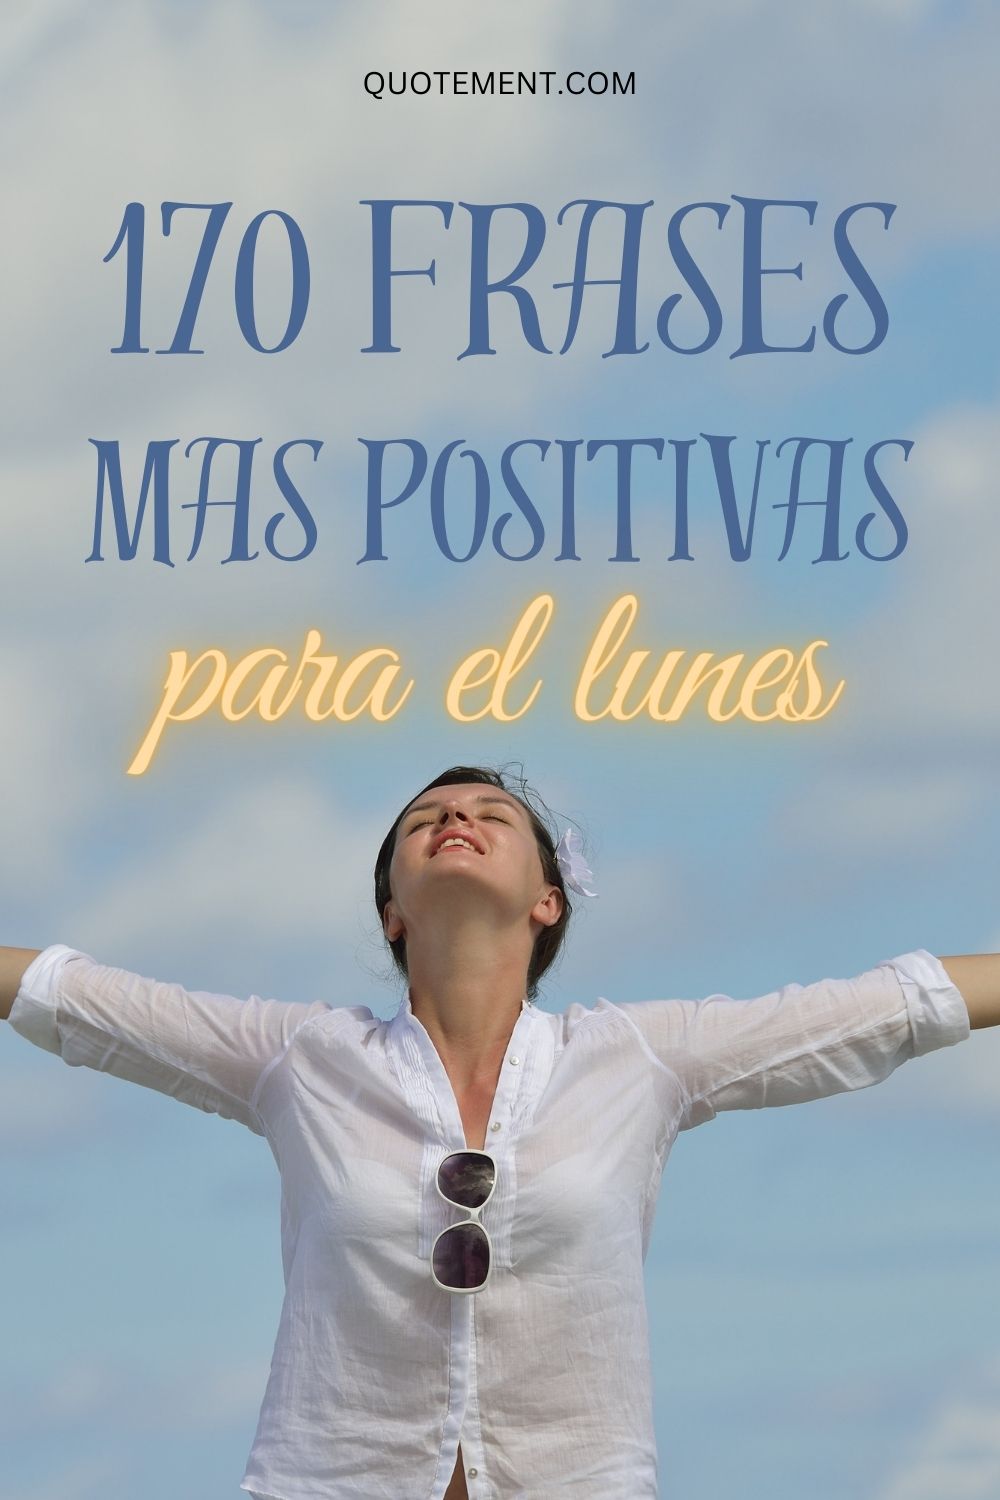 170 frases positivas para afrontar la semana con optimismo